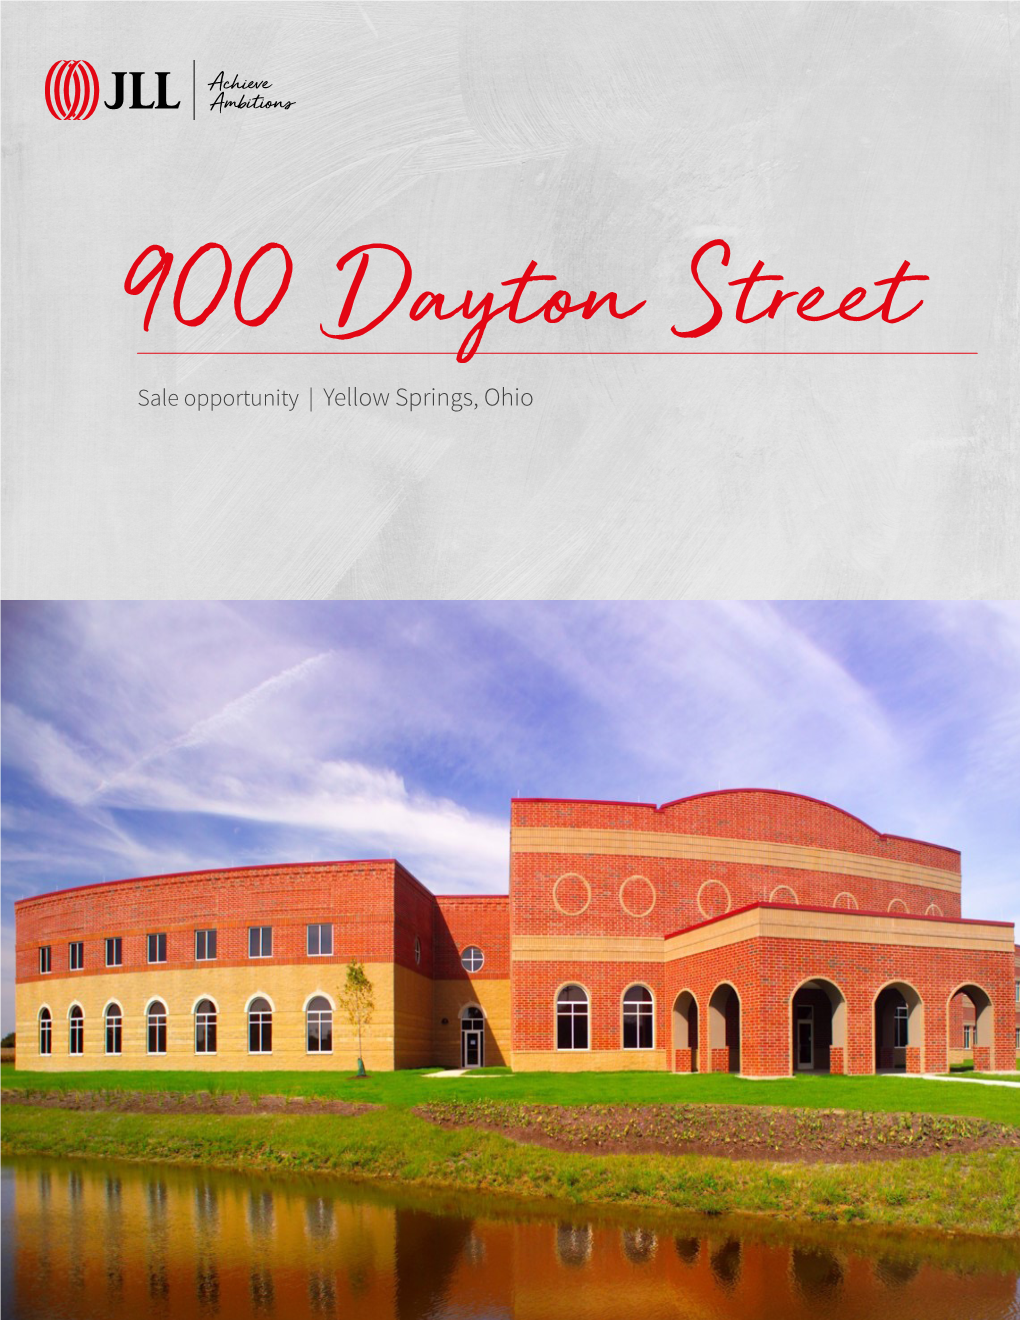 900 Dayton Street | Yellow Springs, Ohio Sale Opportunity | Yellow